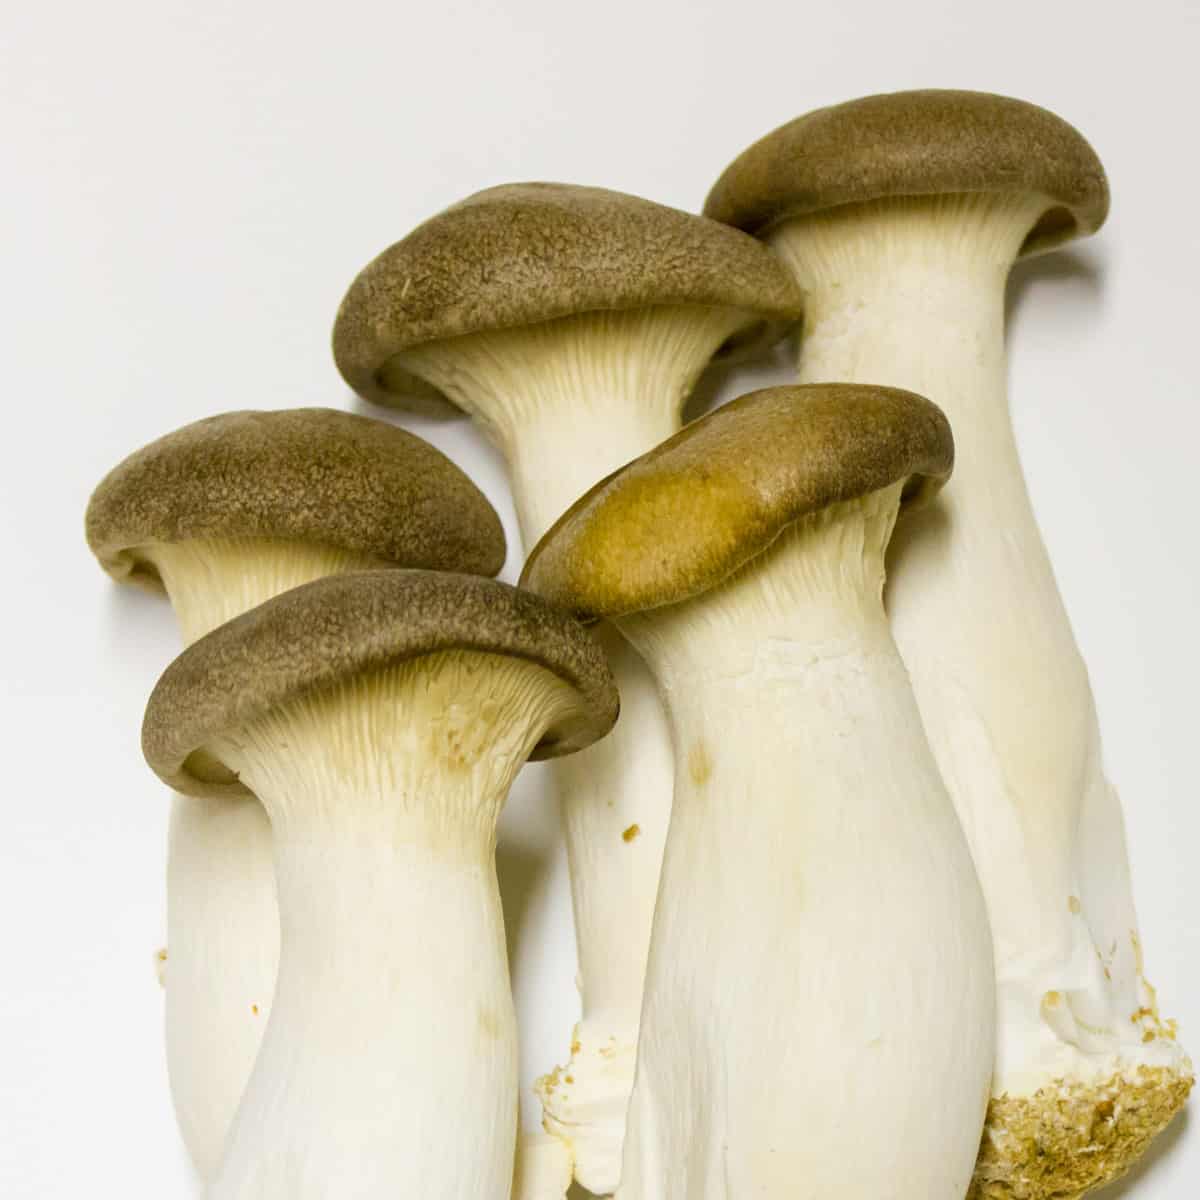 Five large oyster mushrooms piled together.